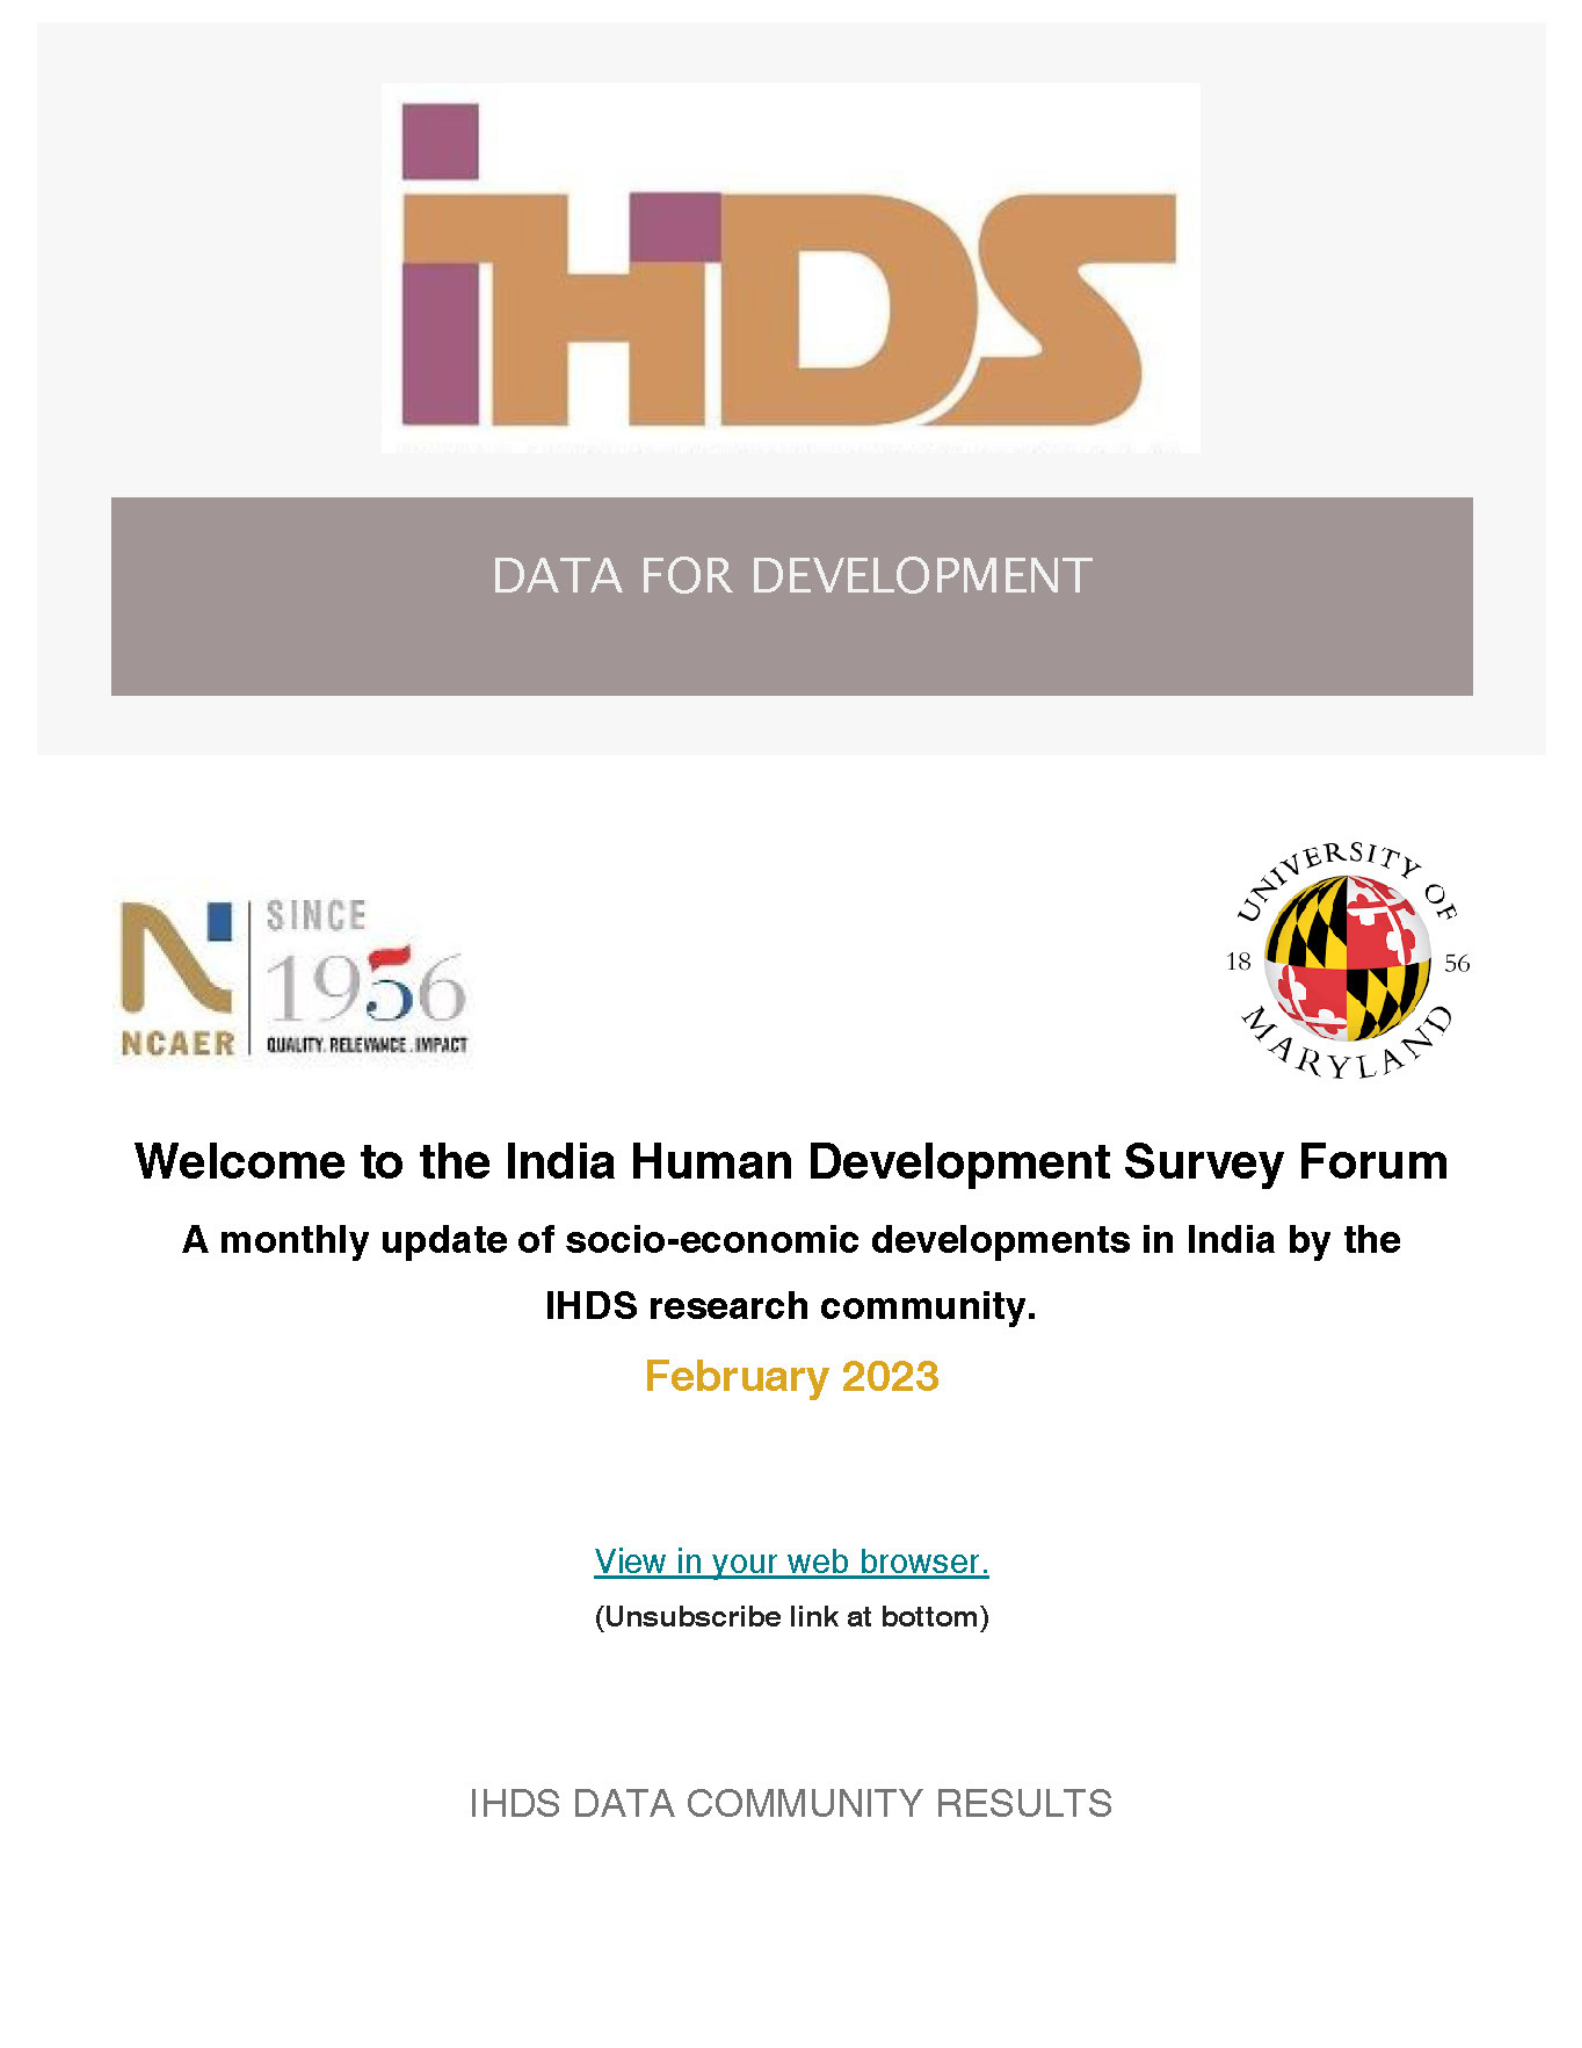 India Human Development Survey Forum, February 2023